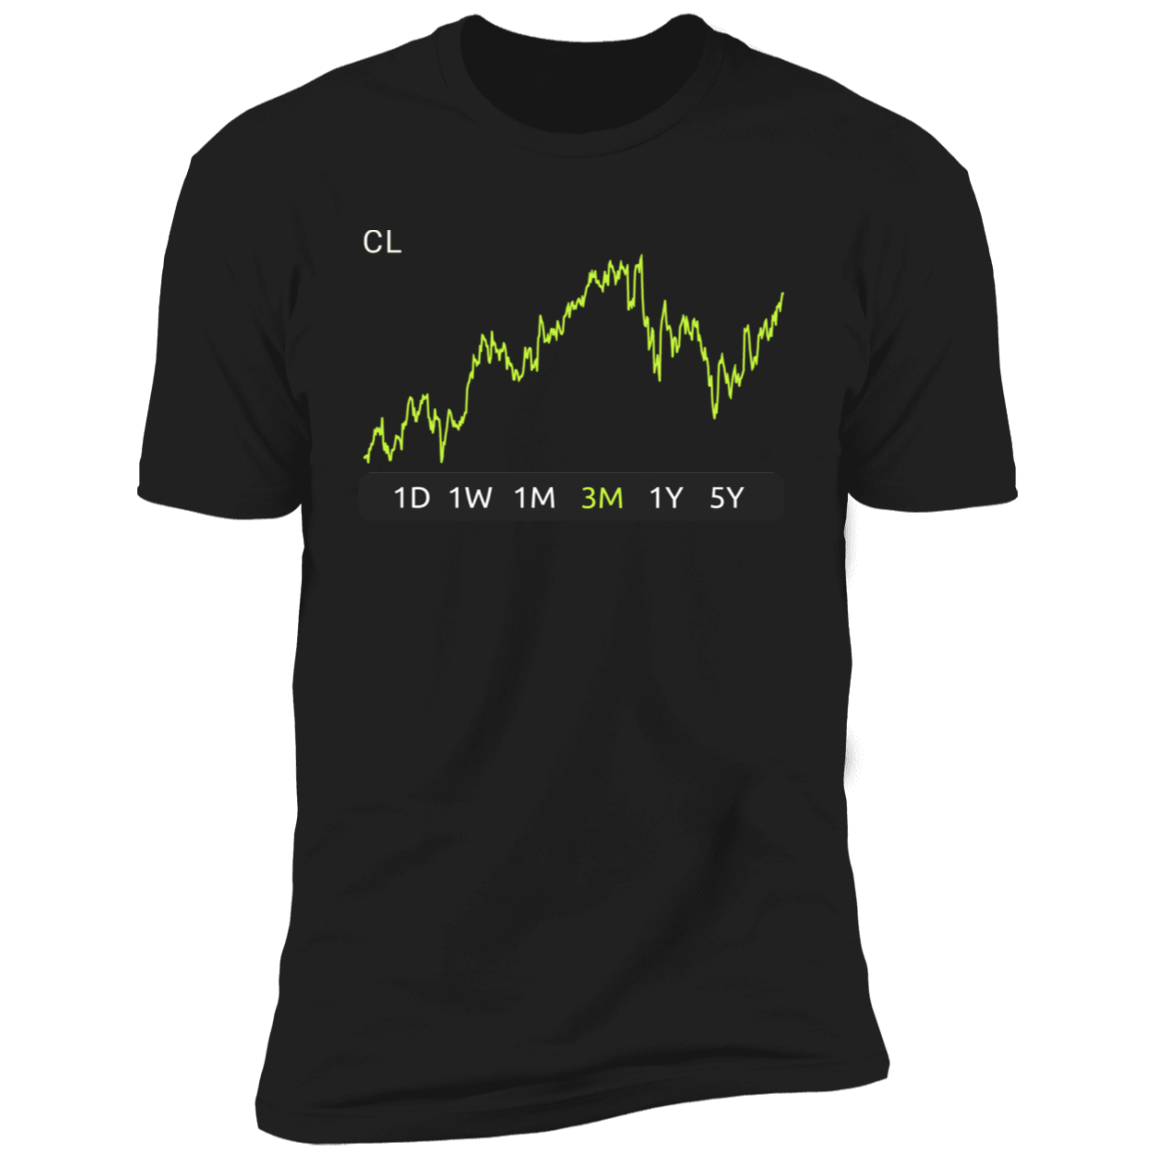 CL Stock 3m Premium T-Shirt